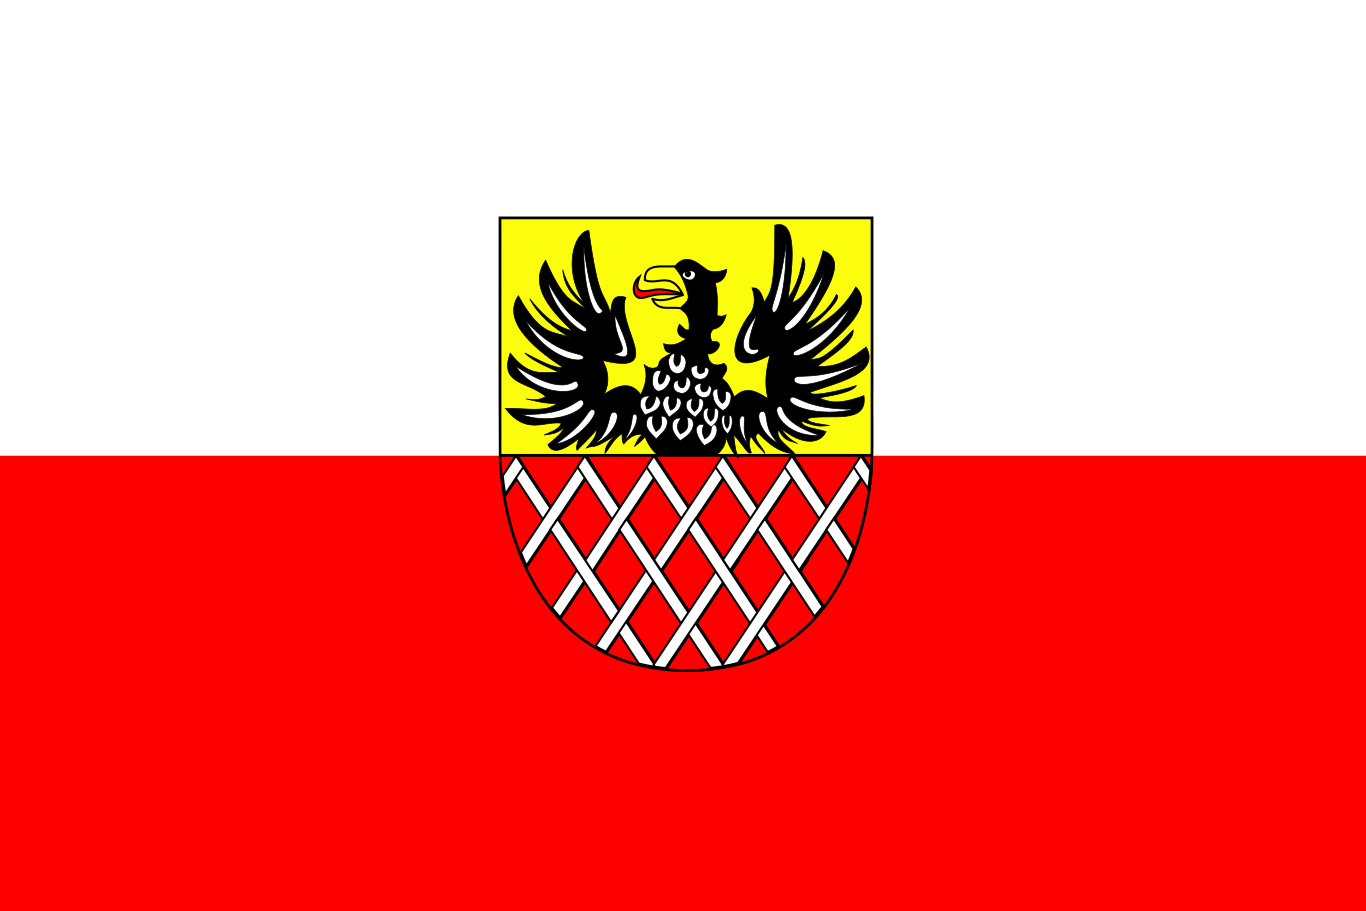 Obrázek vlajky města Cheb v rozlišení 1366x911 Karlovarský kraj Chebská vlajka 